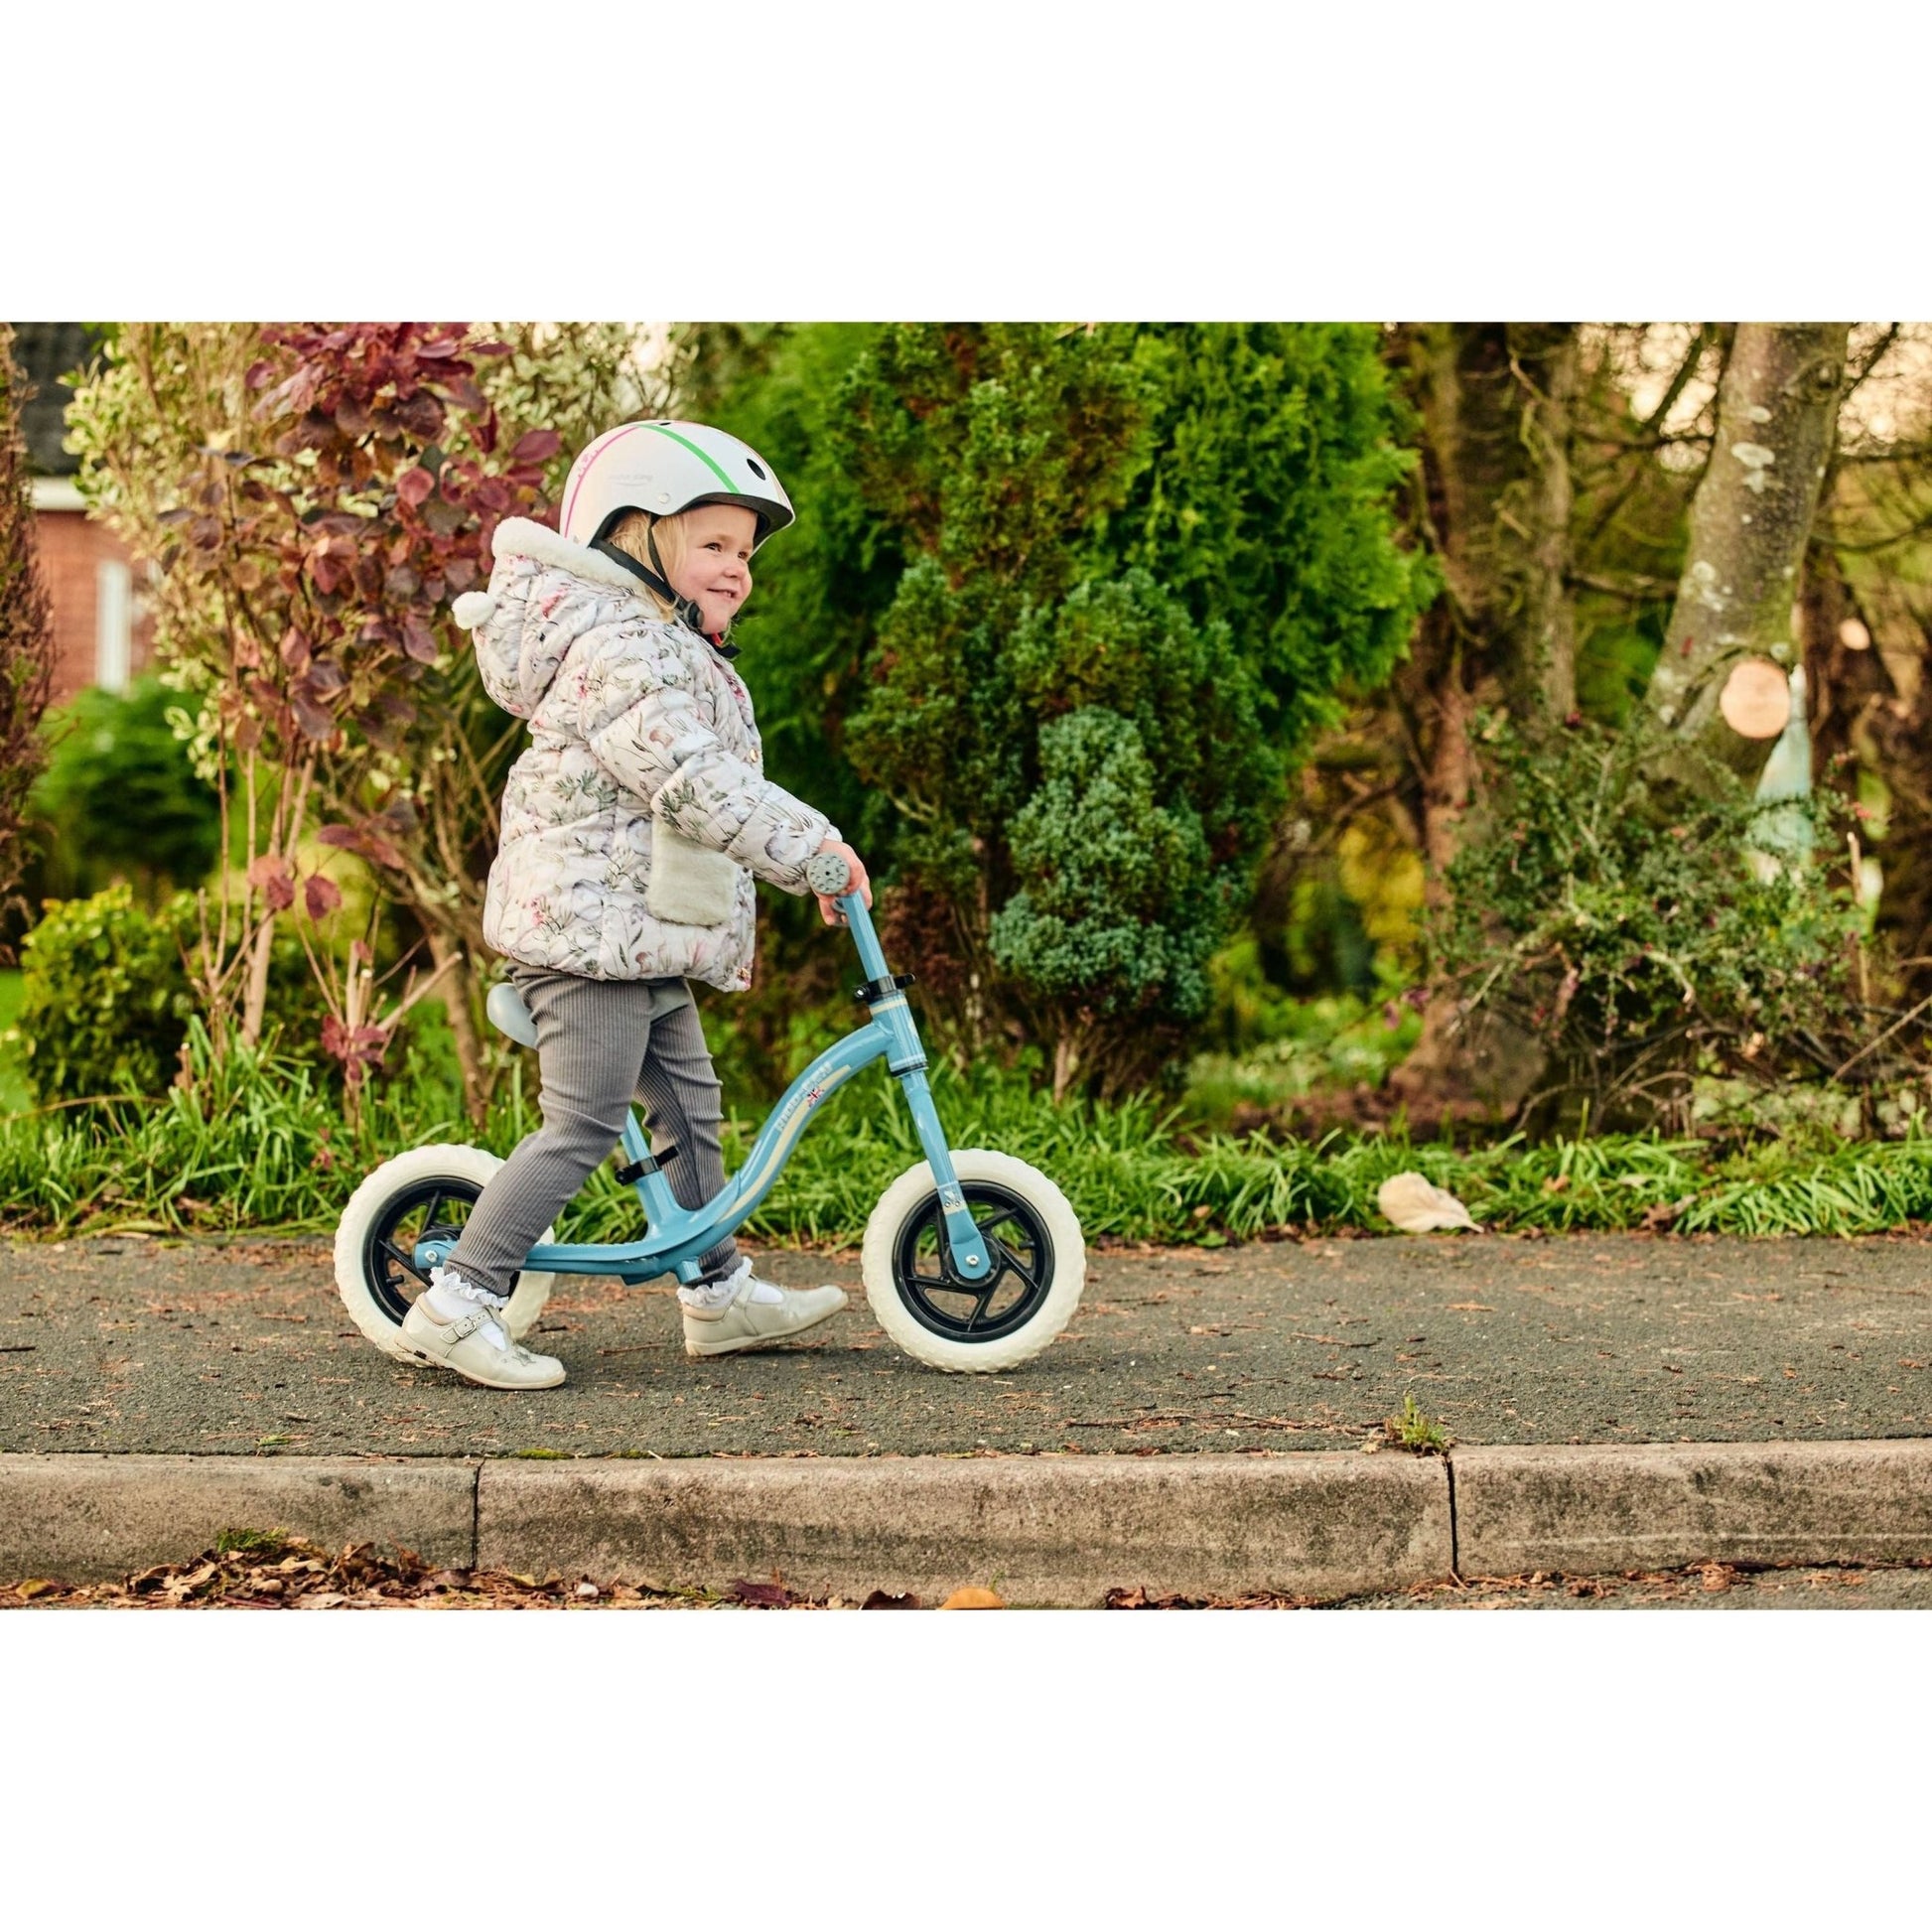 little girl on pavement riding Ride-Ezy Go Balance Bike - Blue & Silver